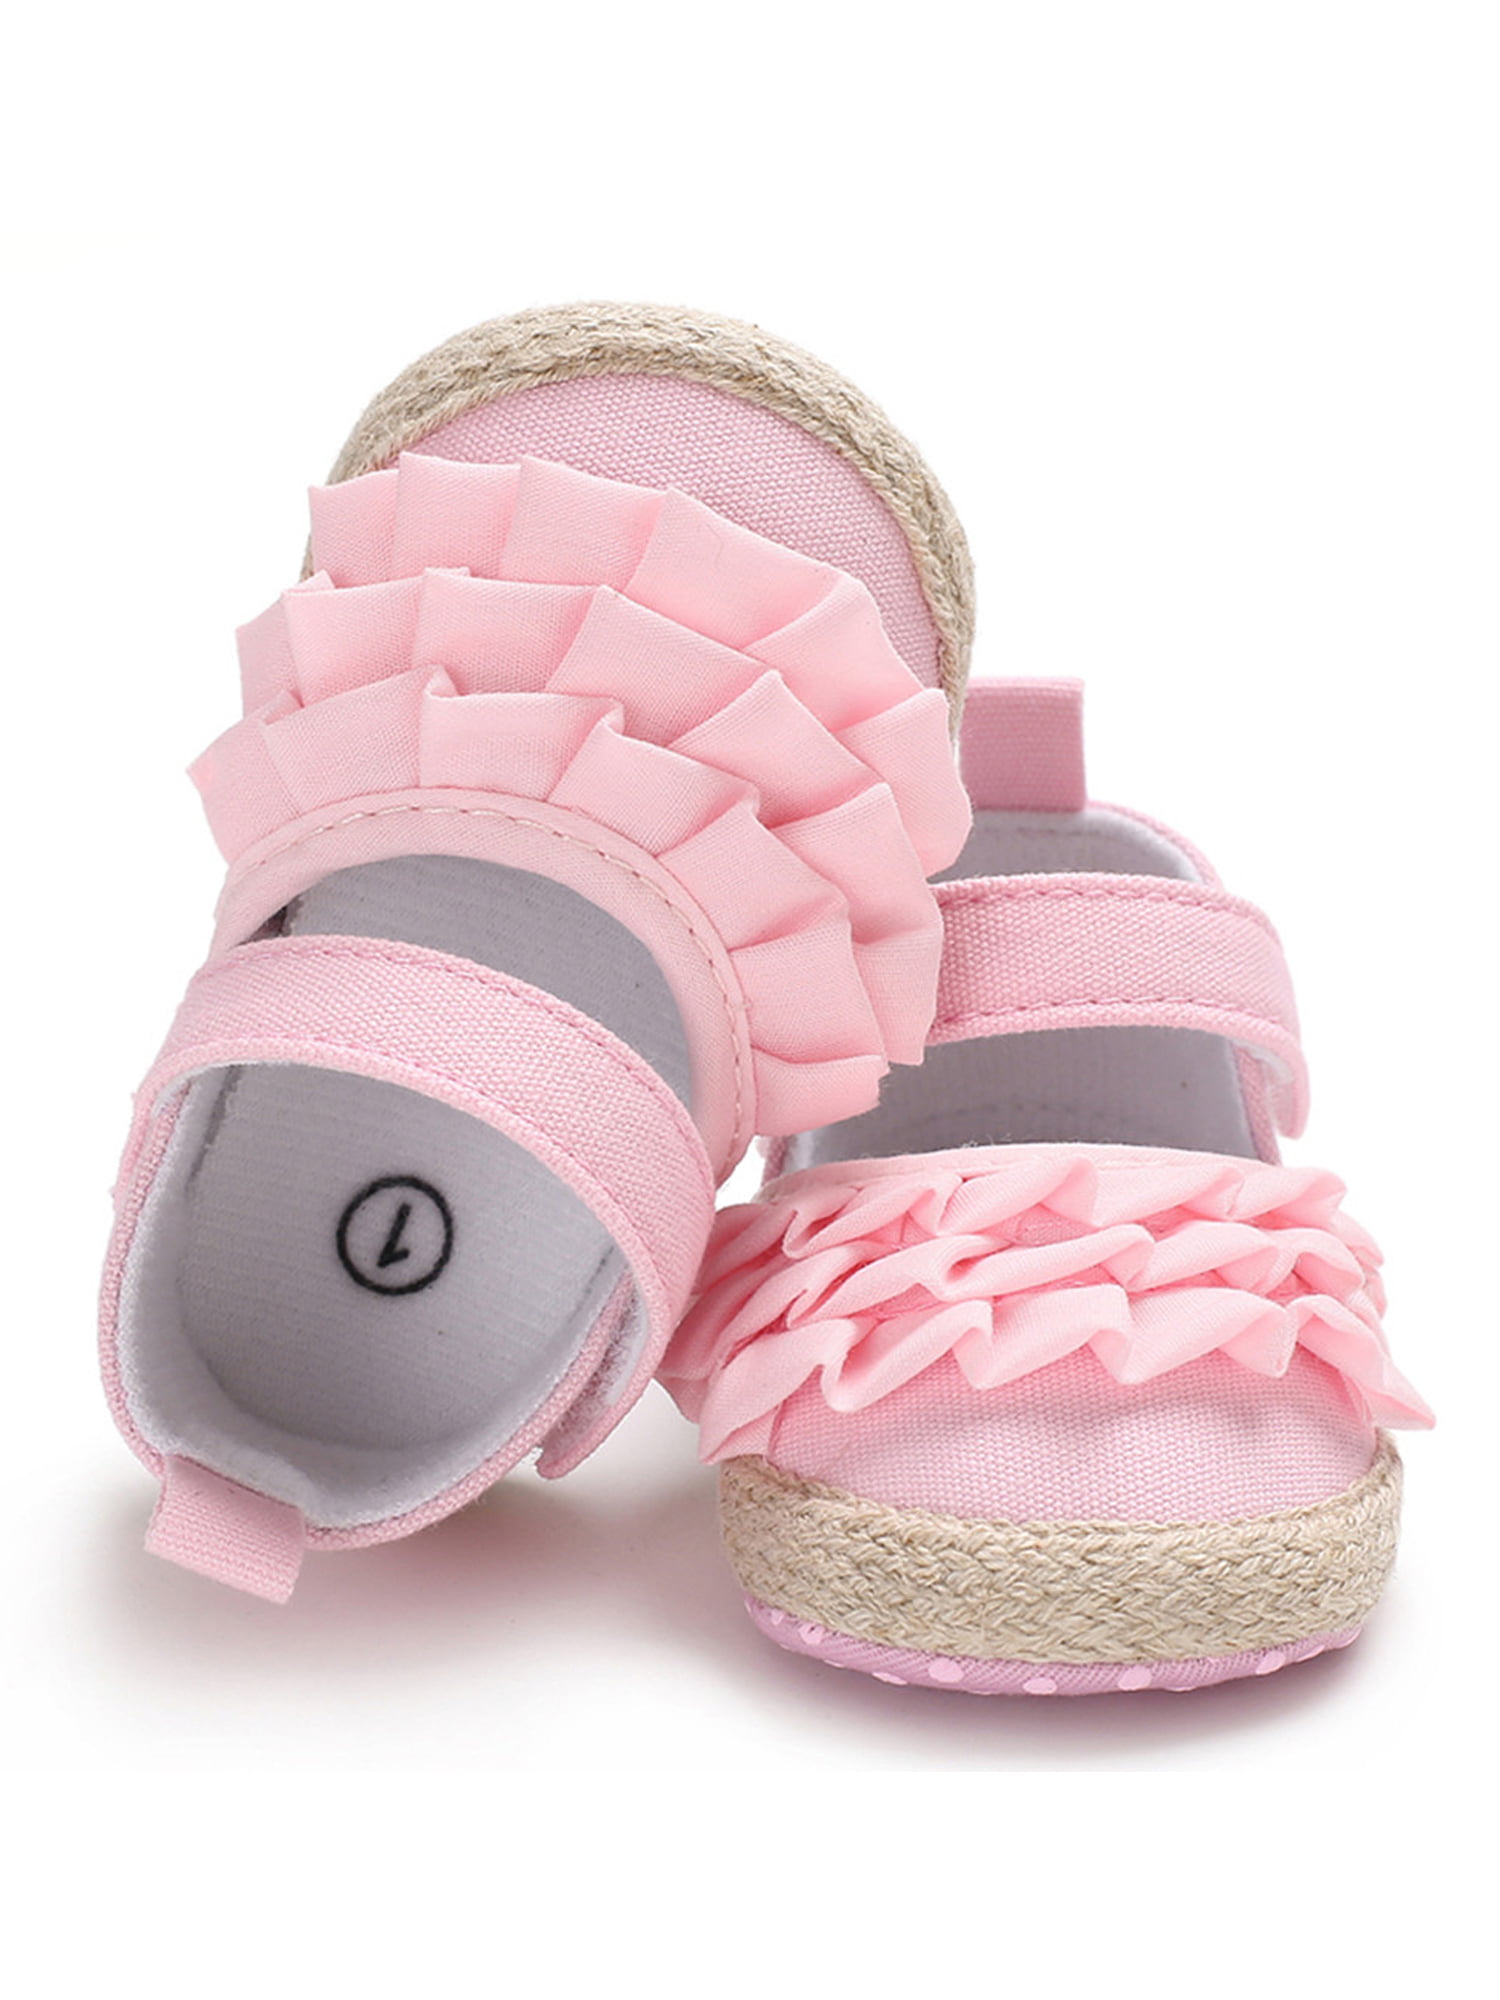 Infant Toddler Baby Boy Ninja Turtles Crib Shoes Size 0-6 6-12 12-18 Months 